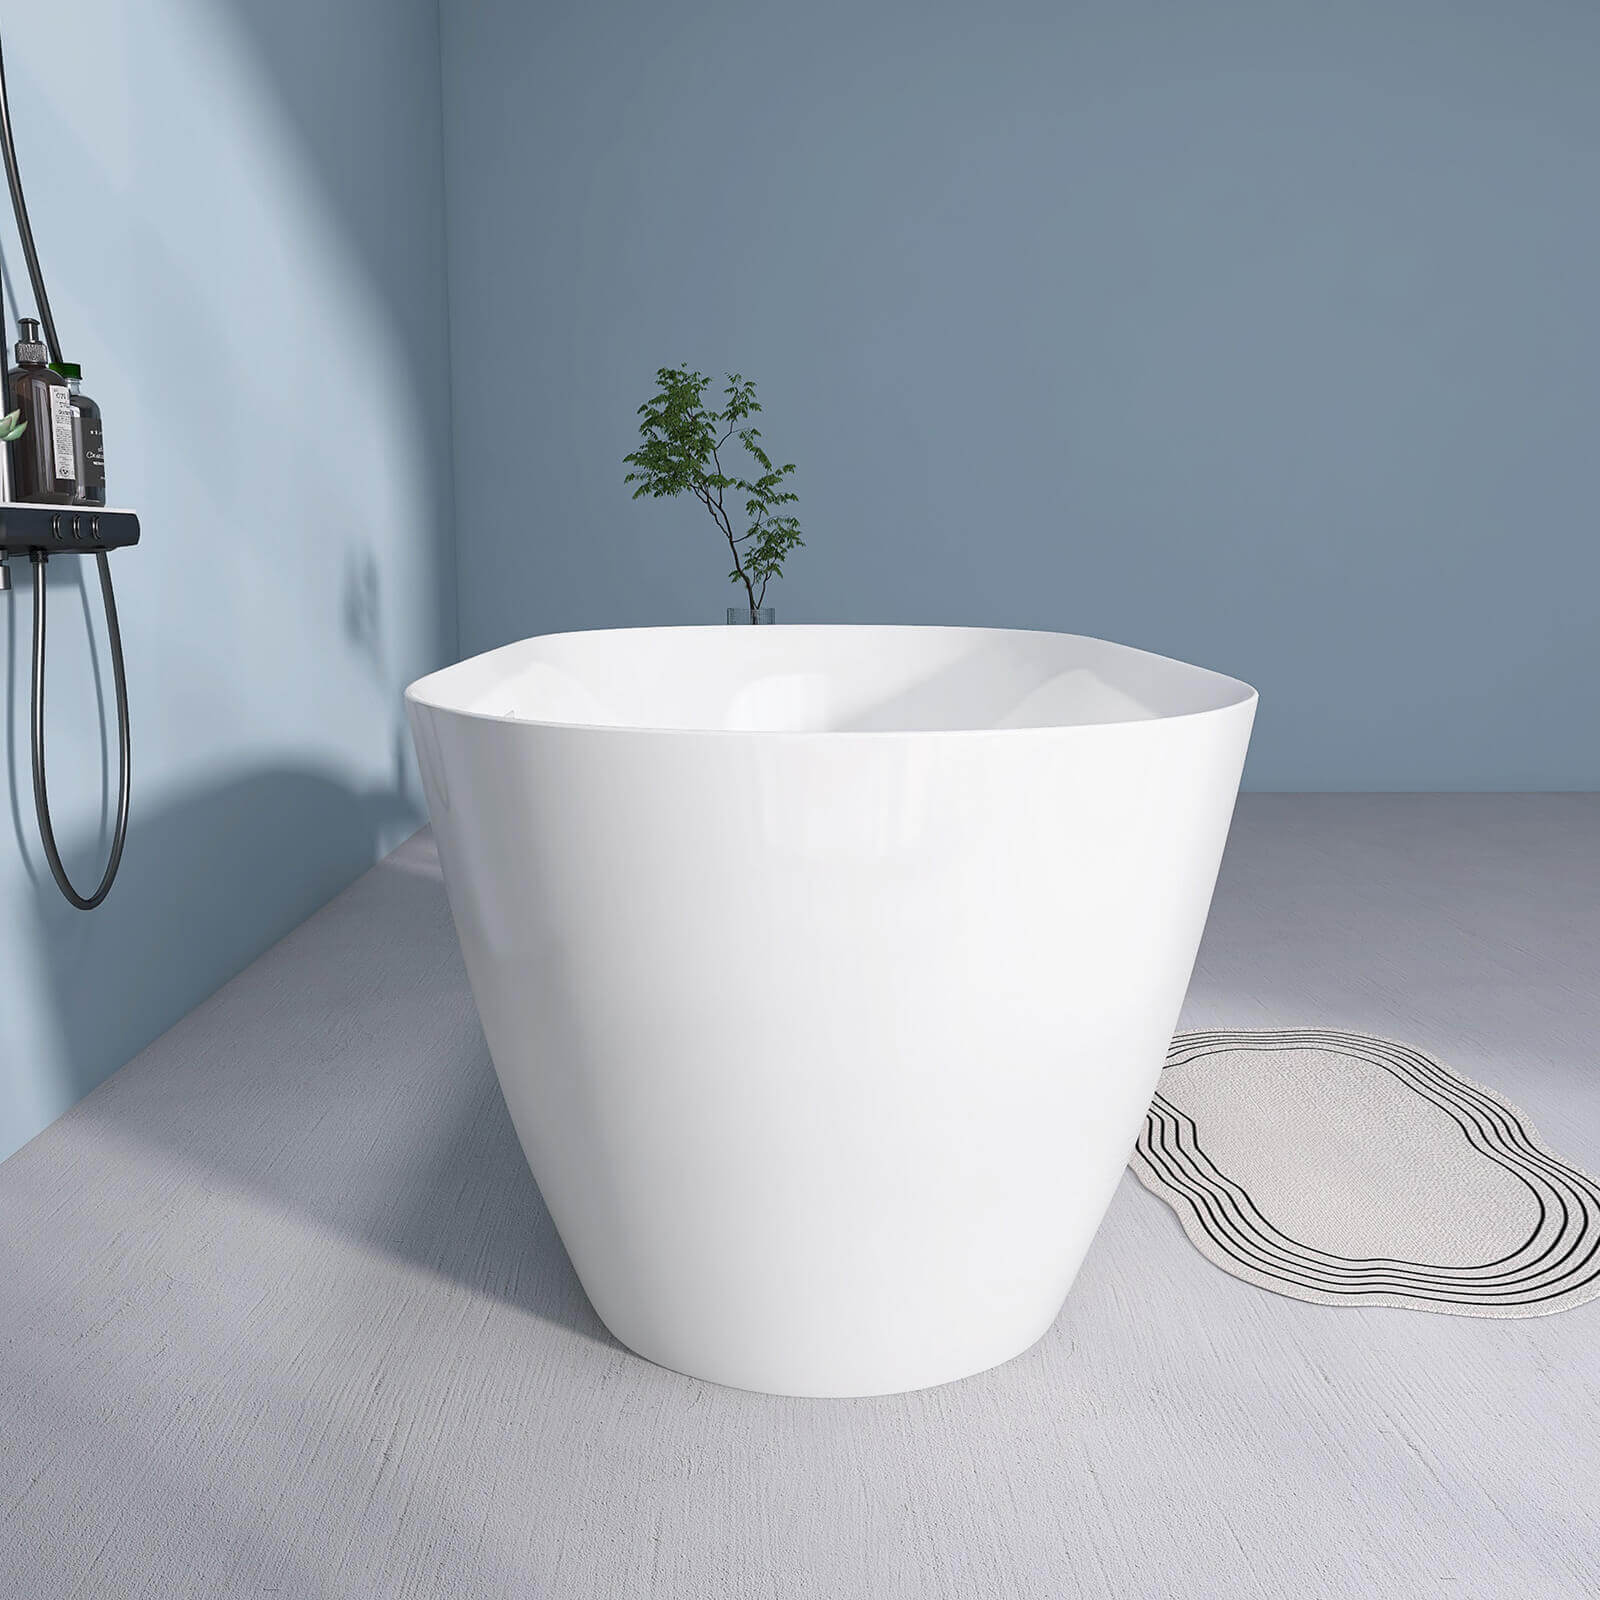 Gloss White 59 inch Bathtub in Acrylic Material